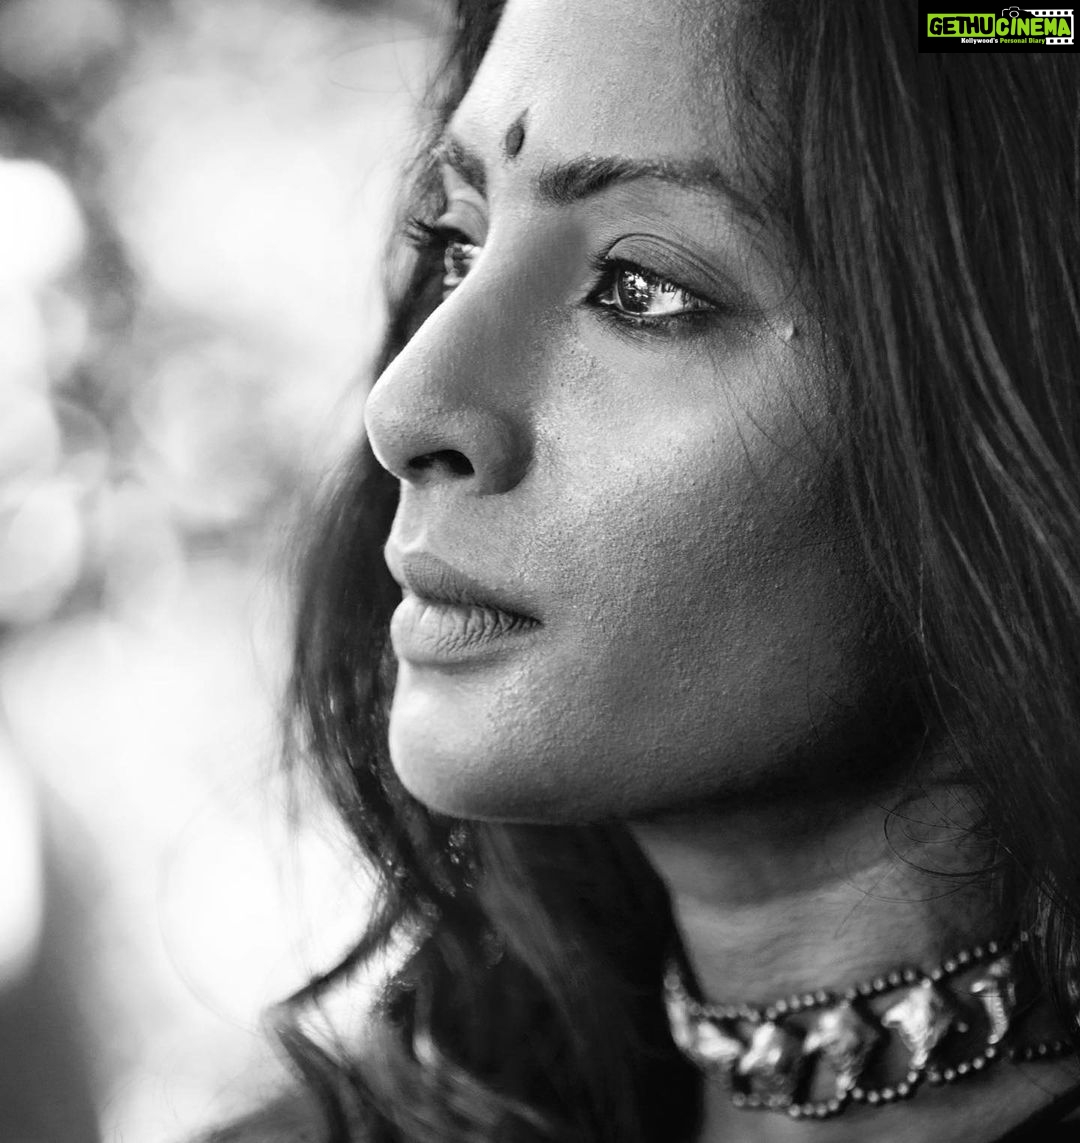 Actress Sriya Reddy HD Photos and Wallpapers April 2022 - Gethu Cinema